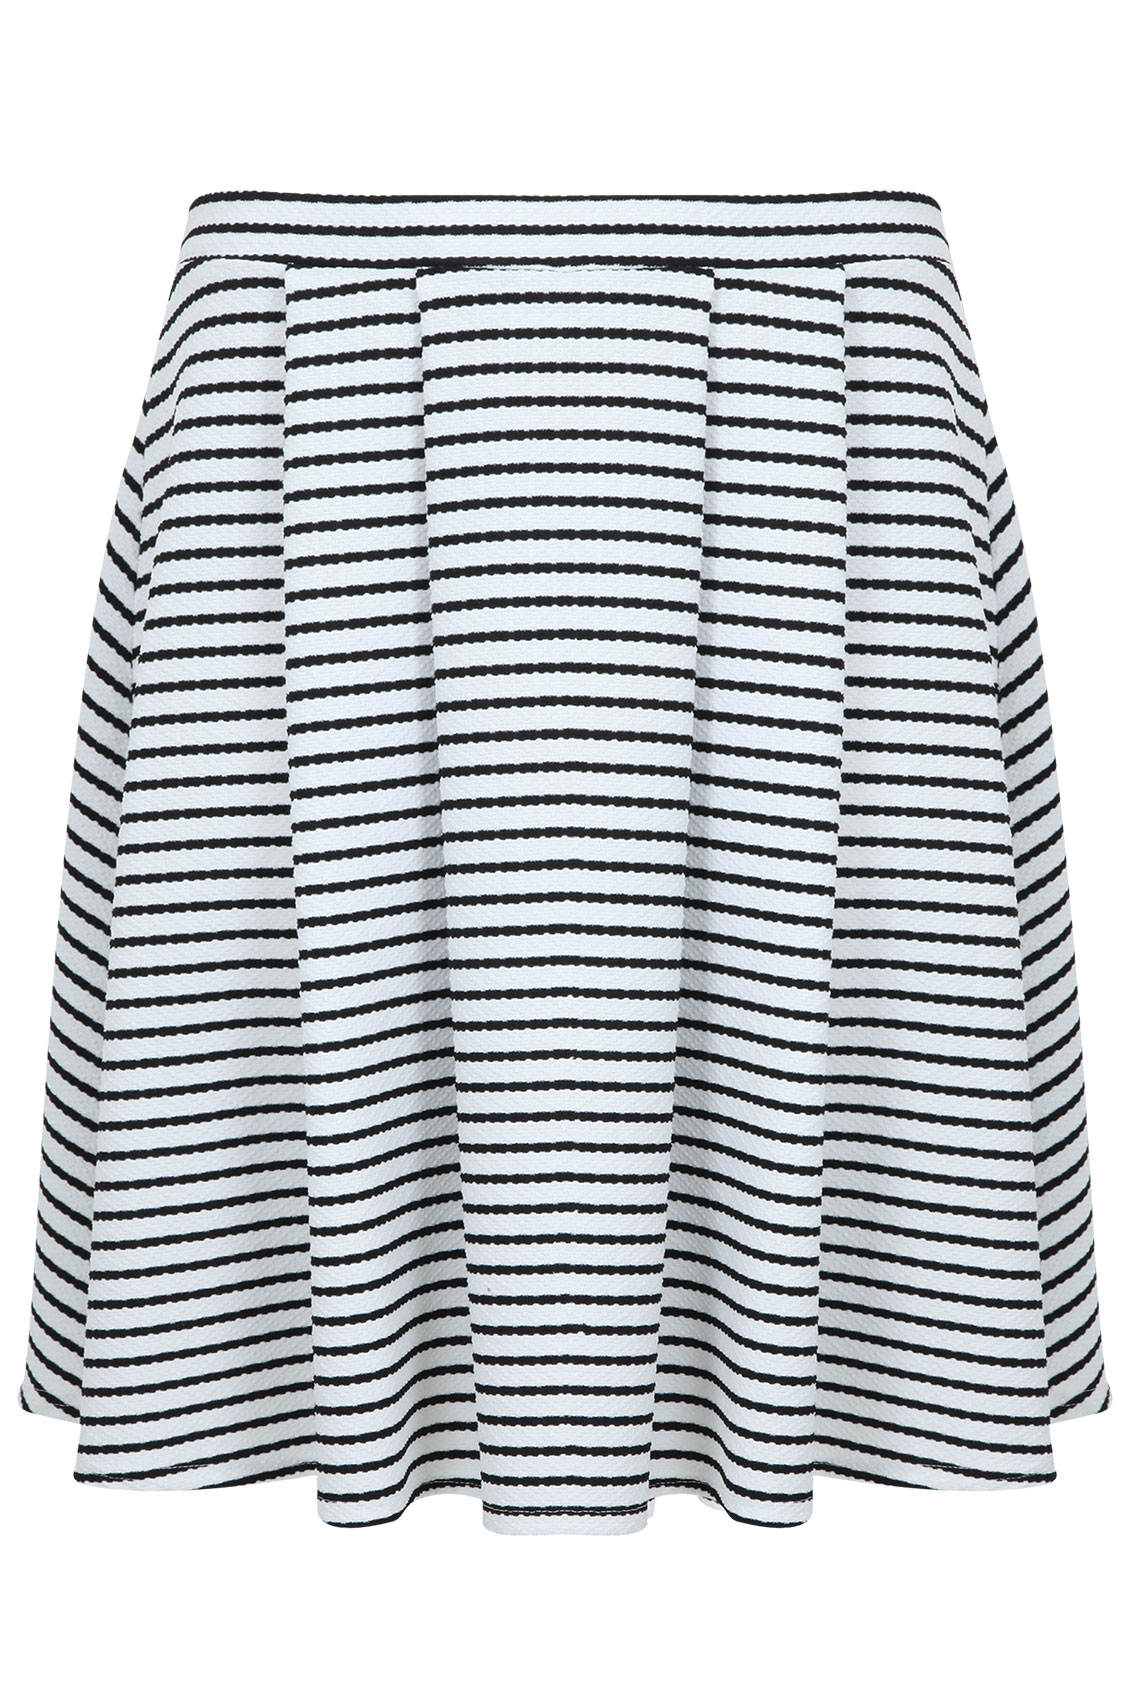 Ivory & Black Textured Stripe Pleat Skirt Plus Size 14,16,18,20,22,24,26-28